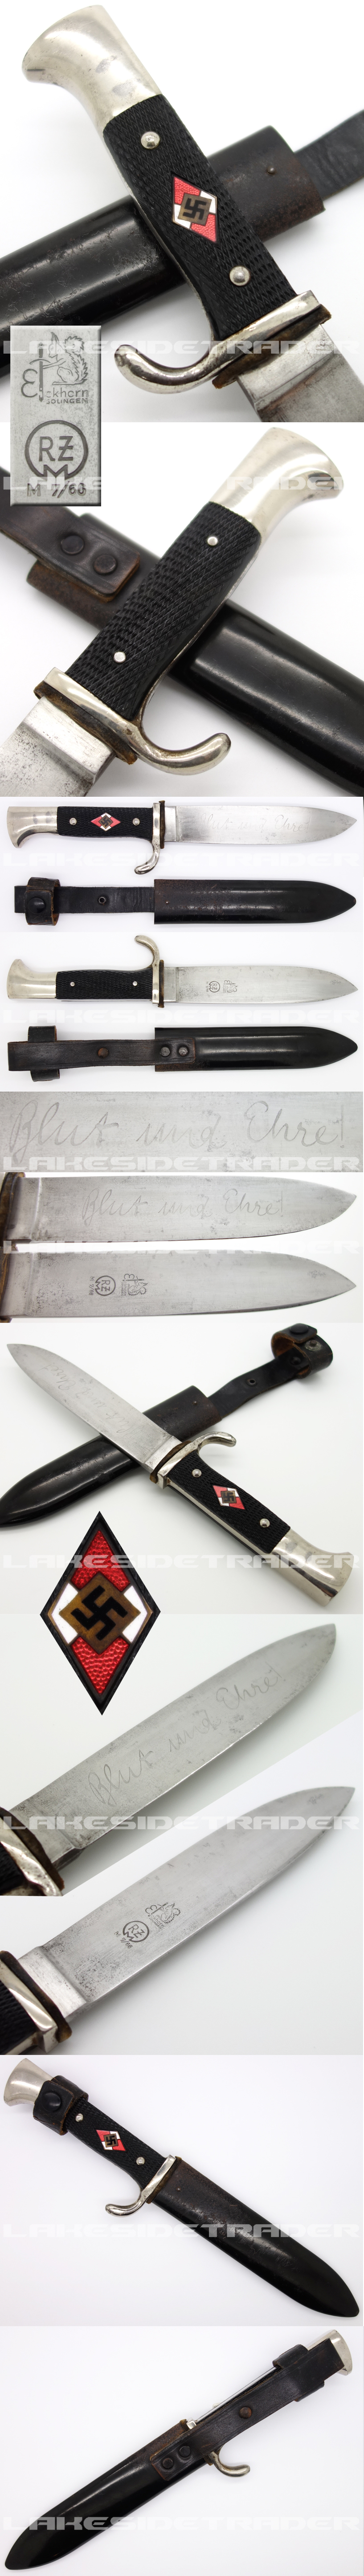 Transitional Hitler Youth knife by Eickhorn